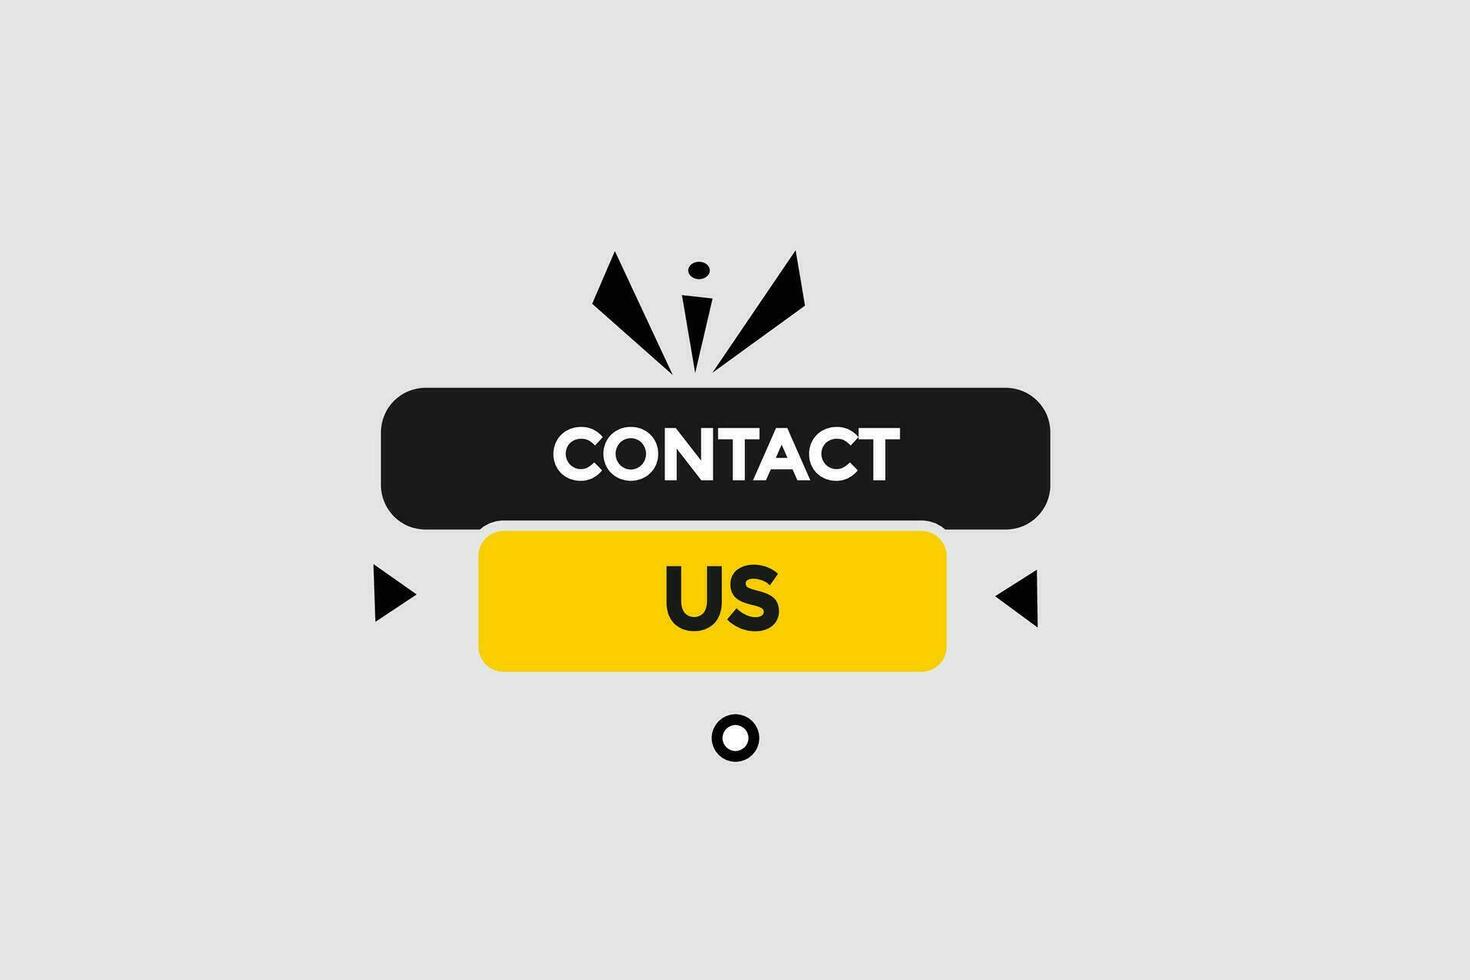 nuevo contacto nosotros moderno, sitio web, hacer clic botón, nivel, firmar, discurso, burbuja bandera, vector